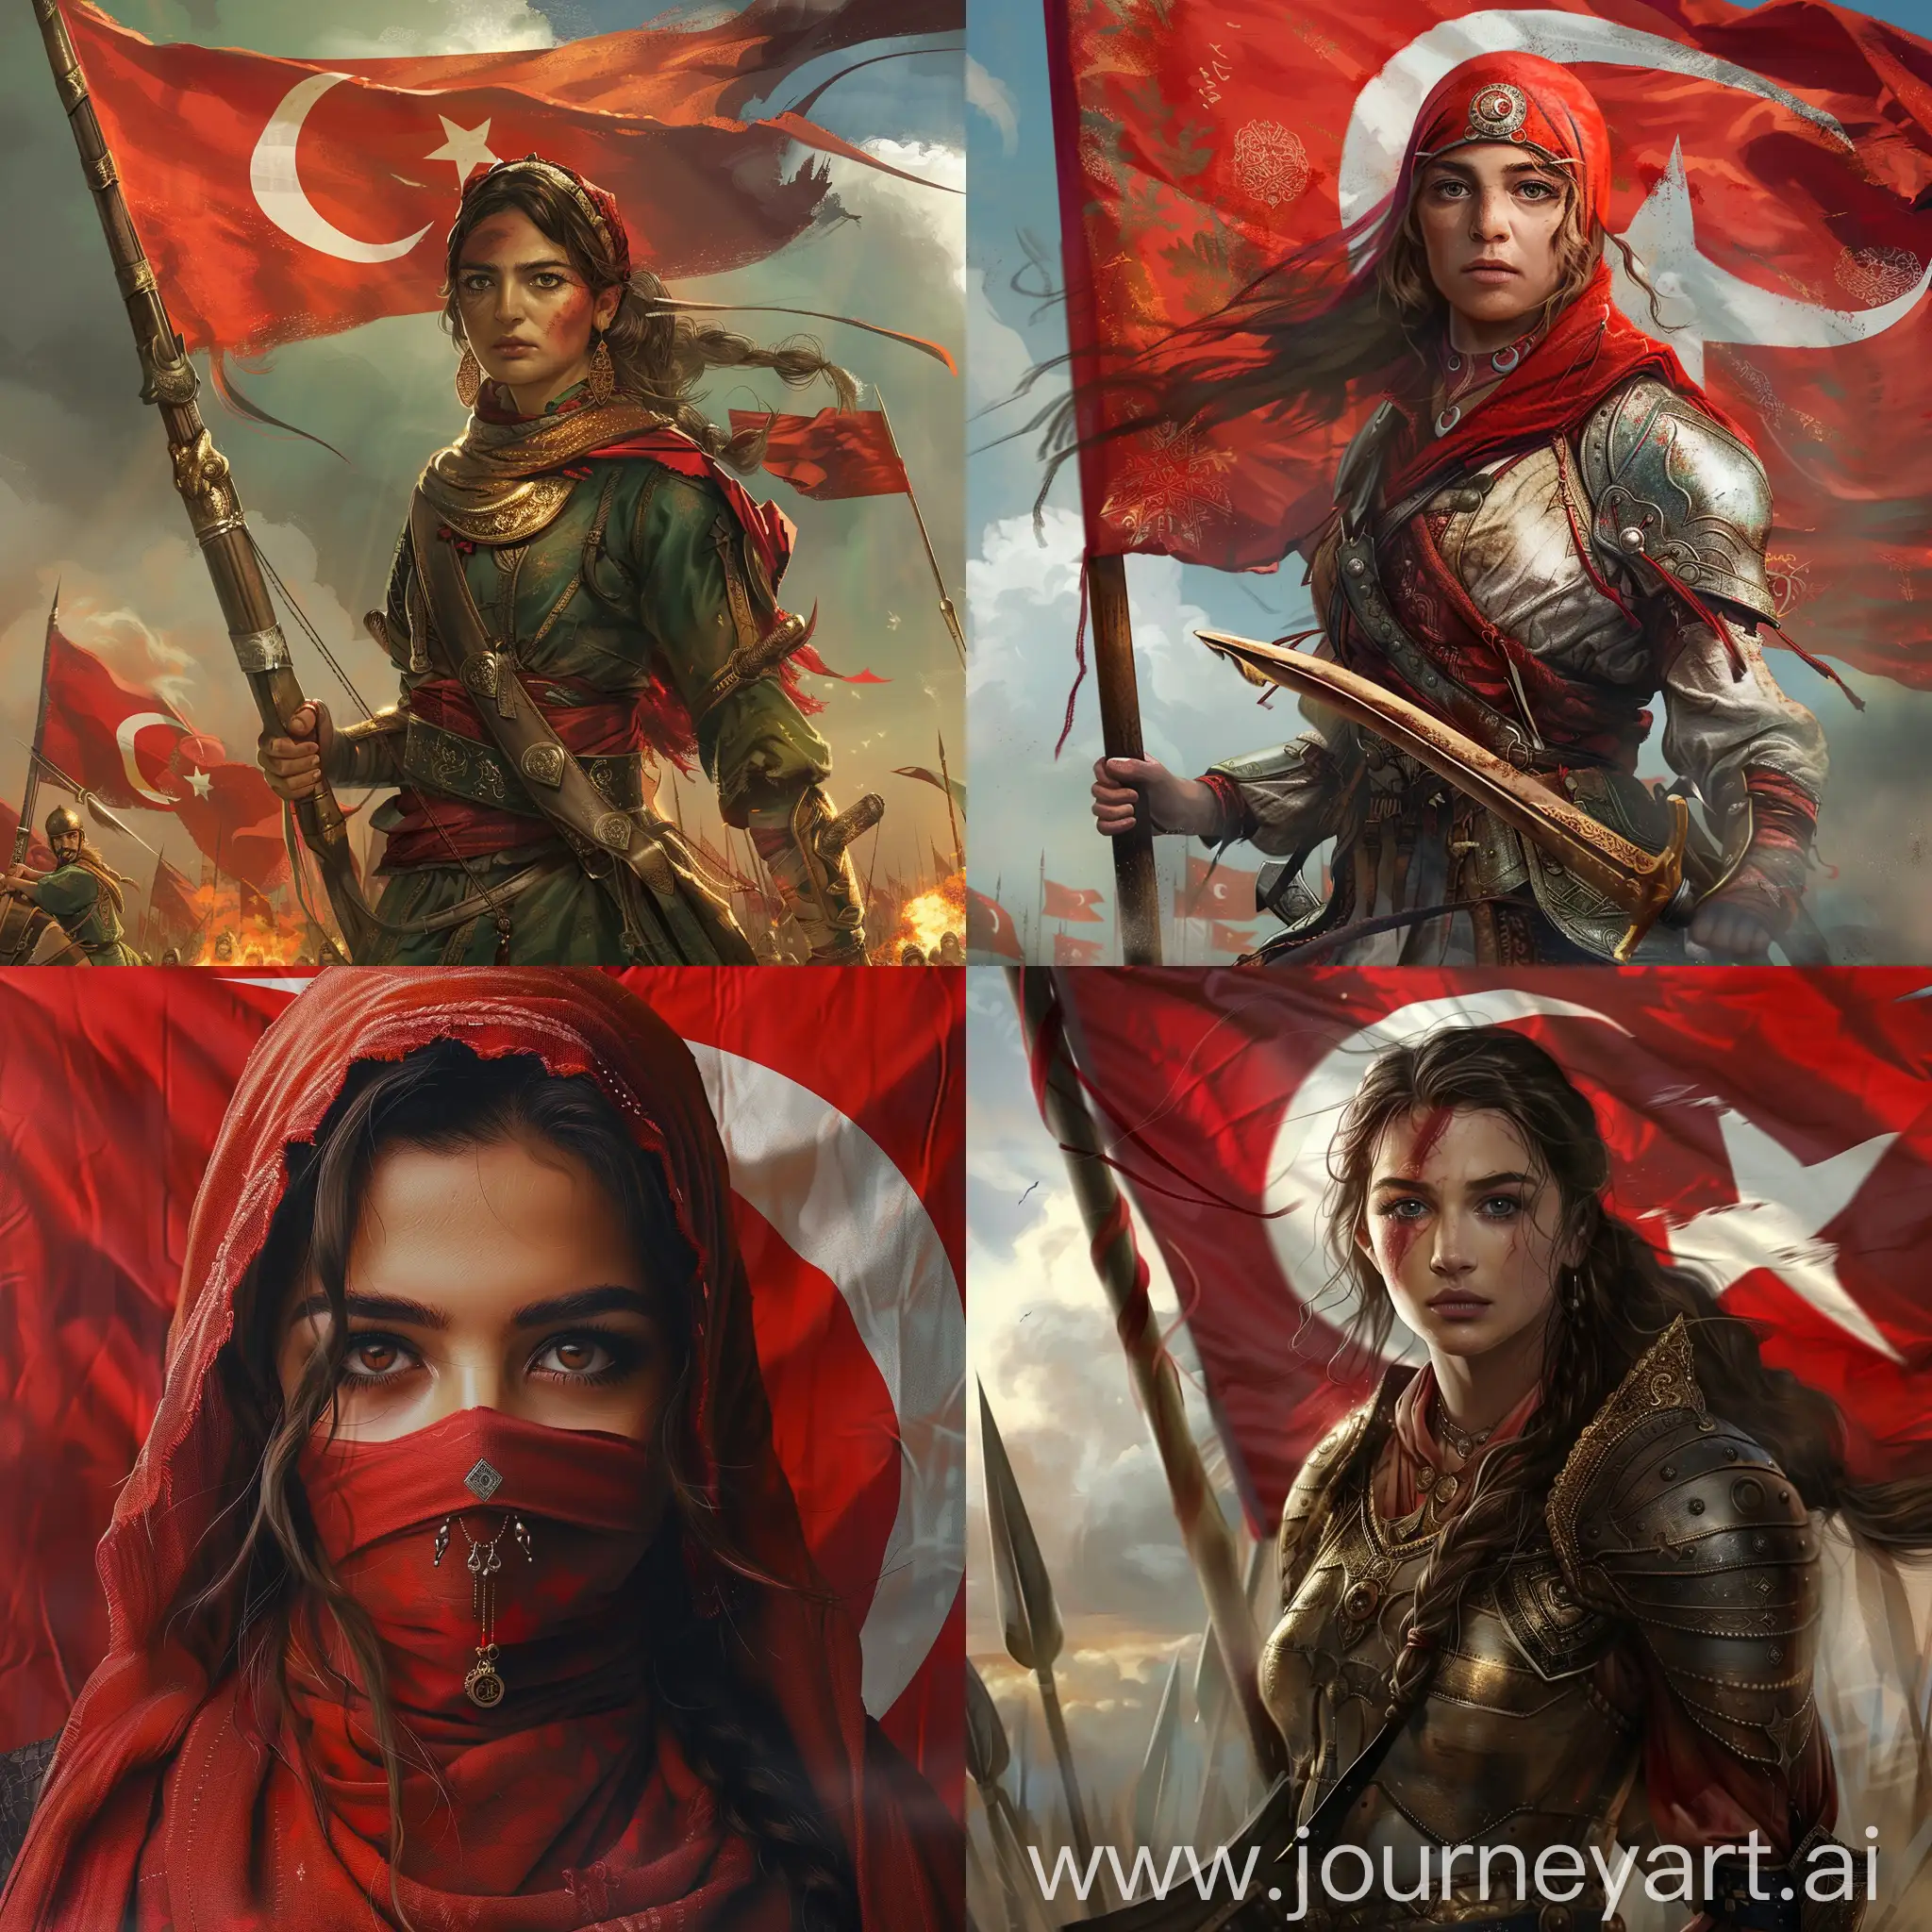 Ottoman warrior girl, realistic , türkish flag

